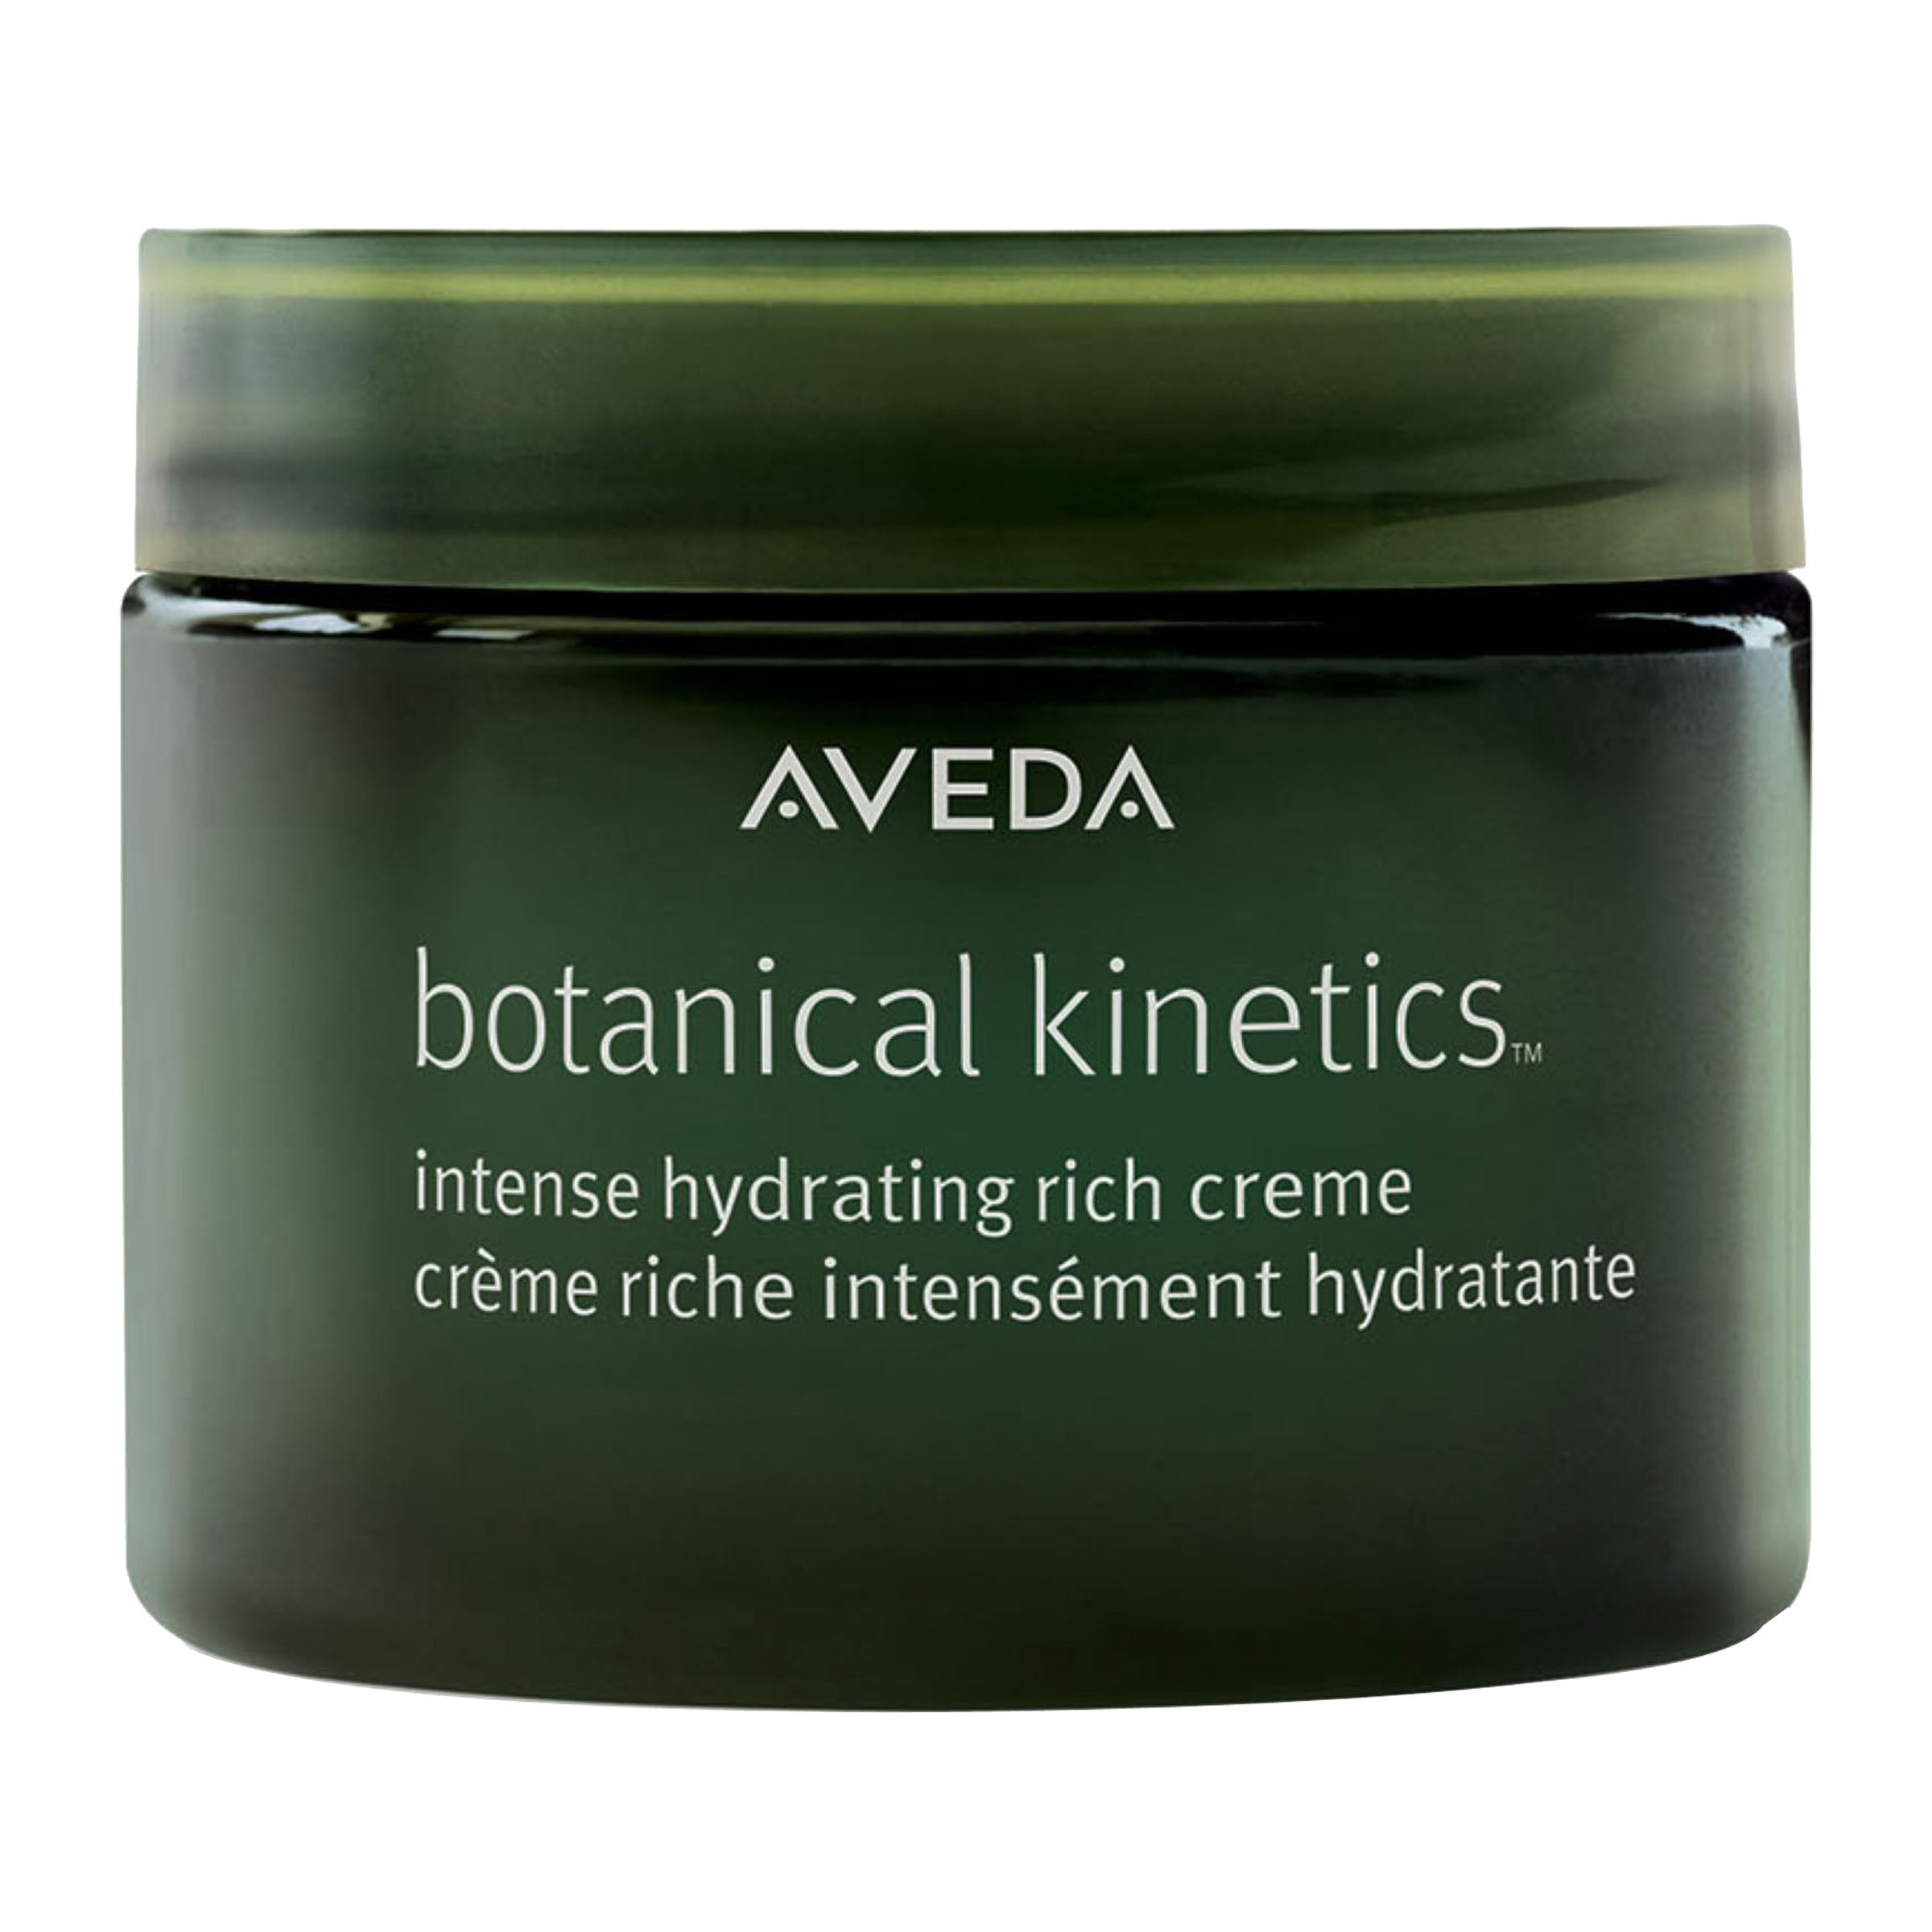 aveda botanical kinetics™ intense hydrating rich creme